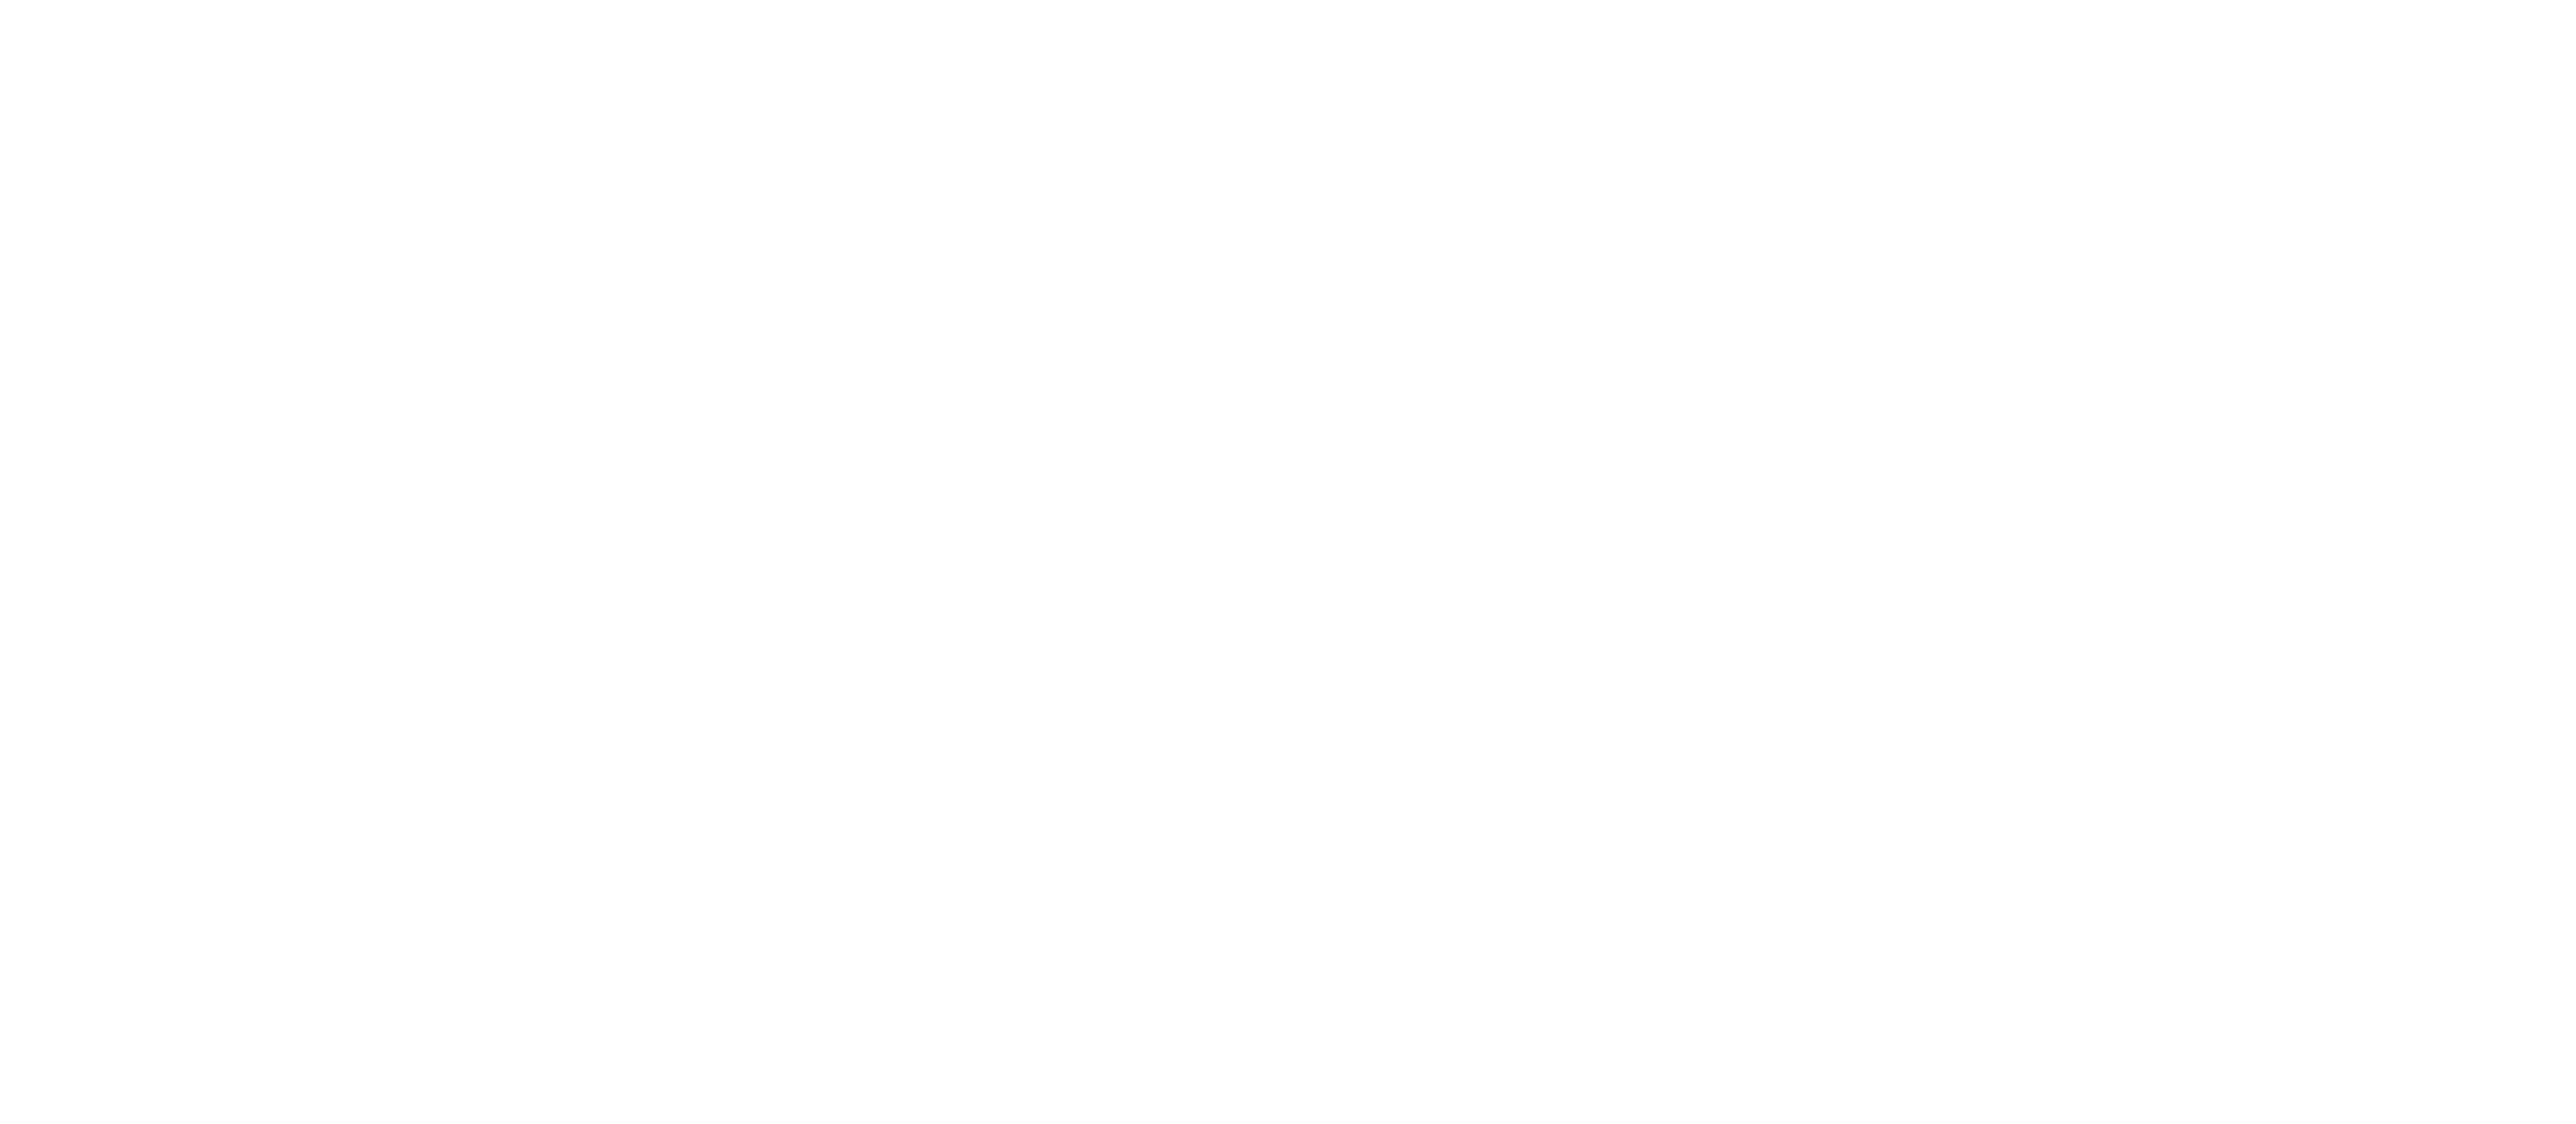 Barbs Maskenbild